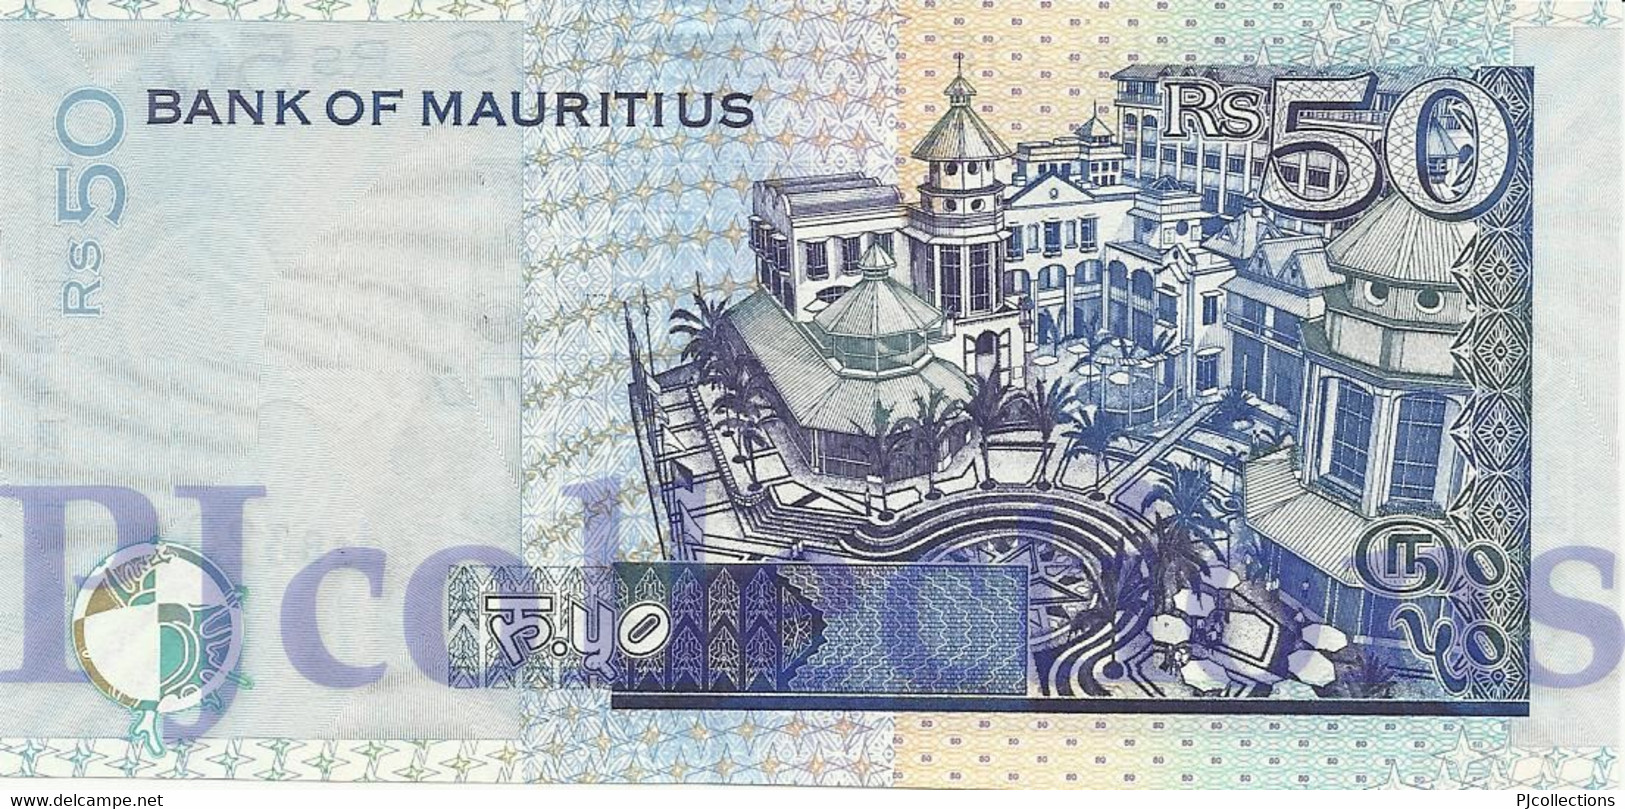 LOT MAURITIUS 50 RUPEES 2009 PICK 50e UNC X 5 PCS - Mauritius